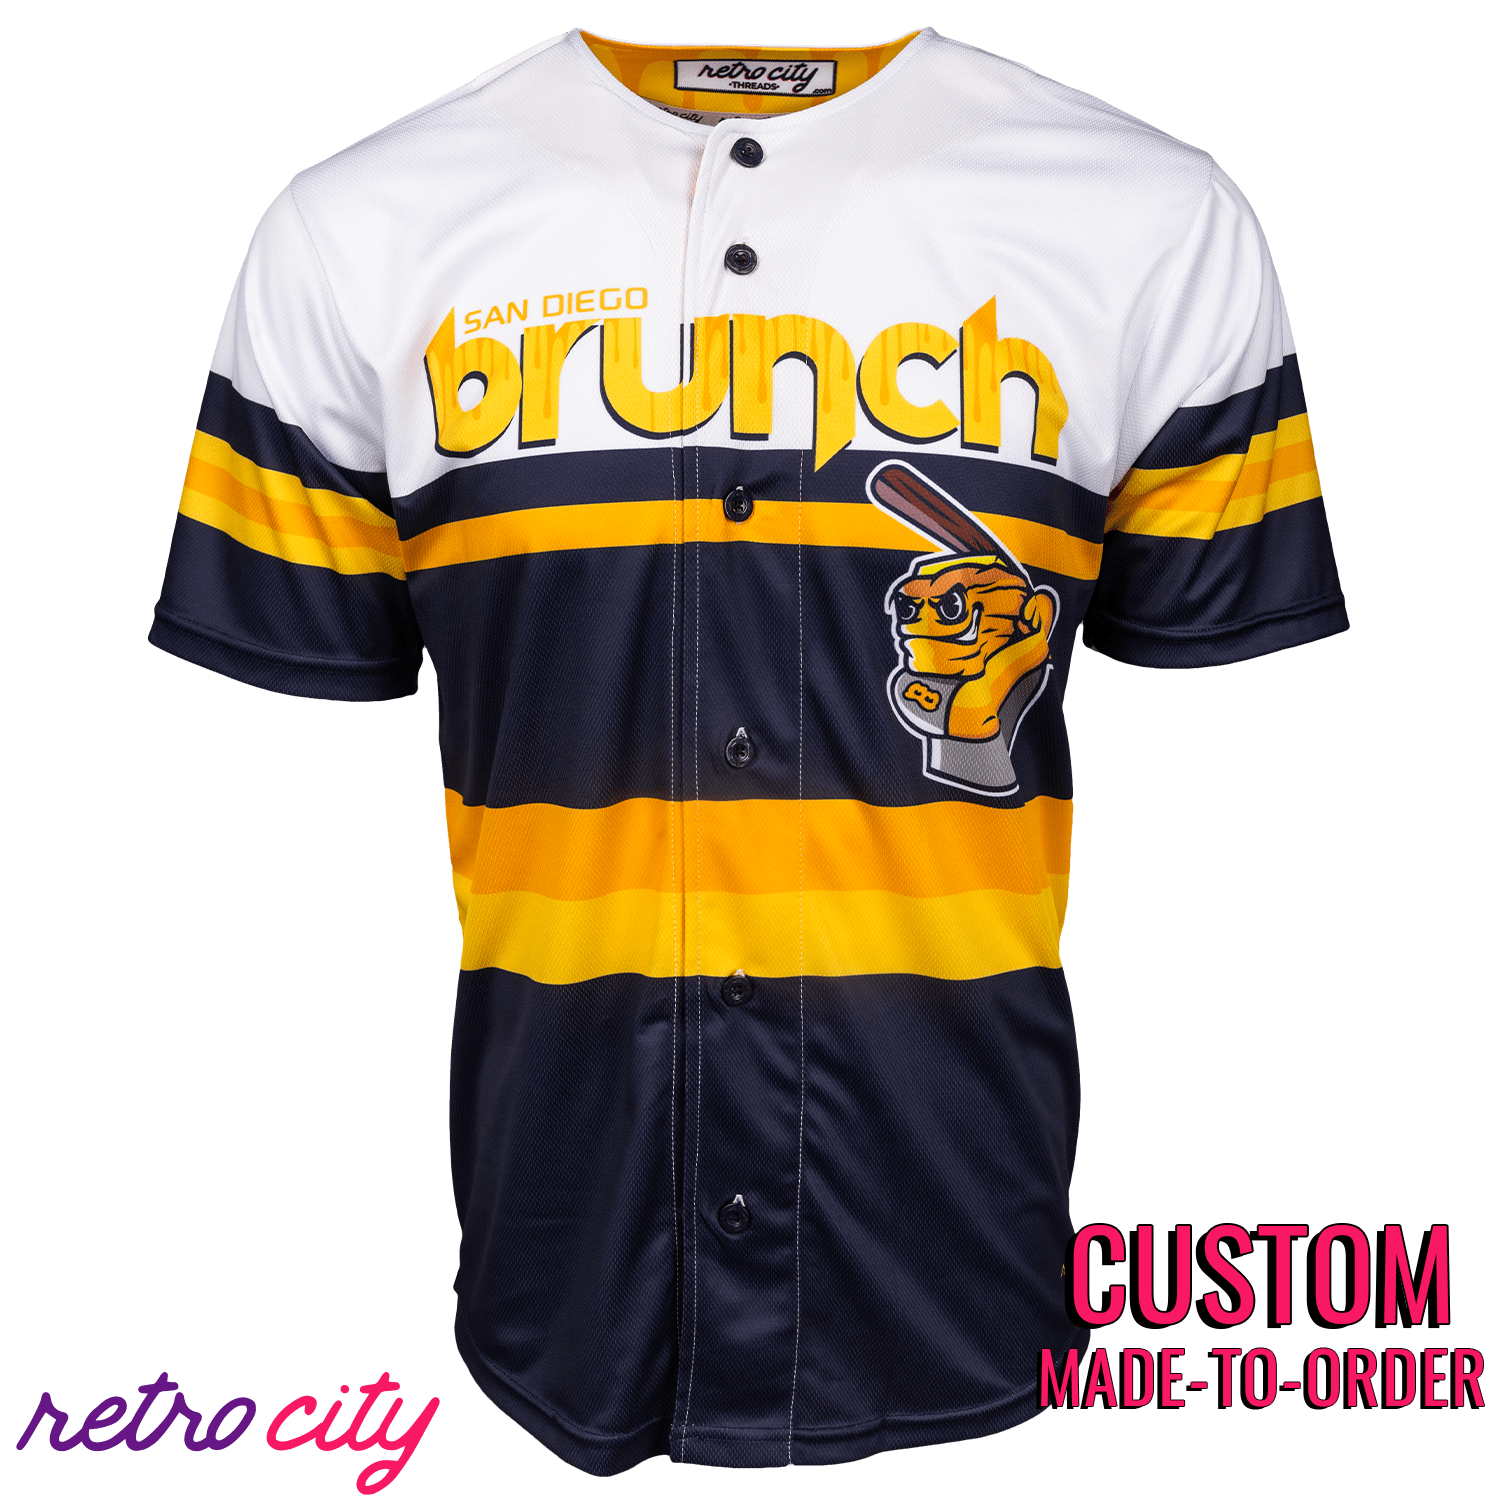 san diego brunch retro league custom baseball jersey (away)